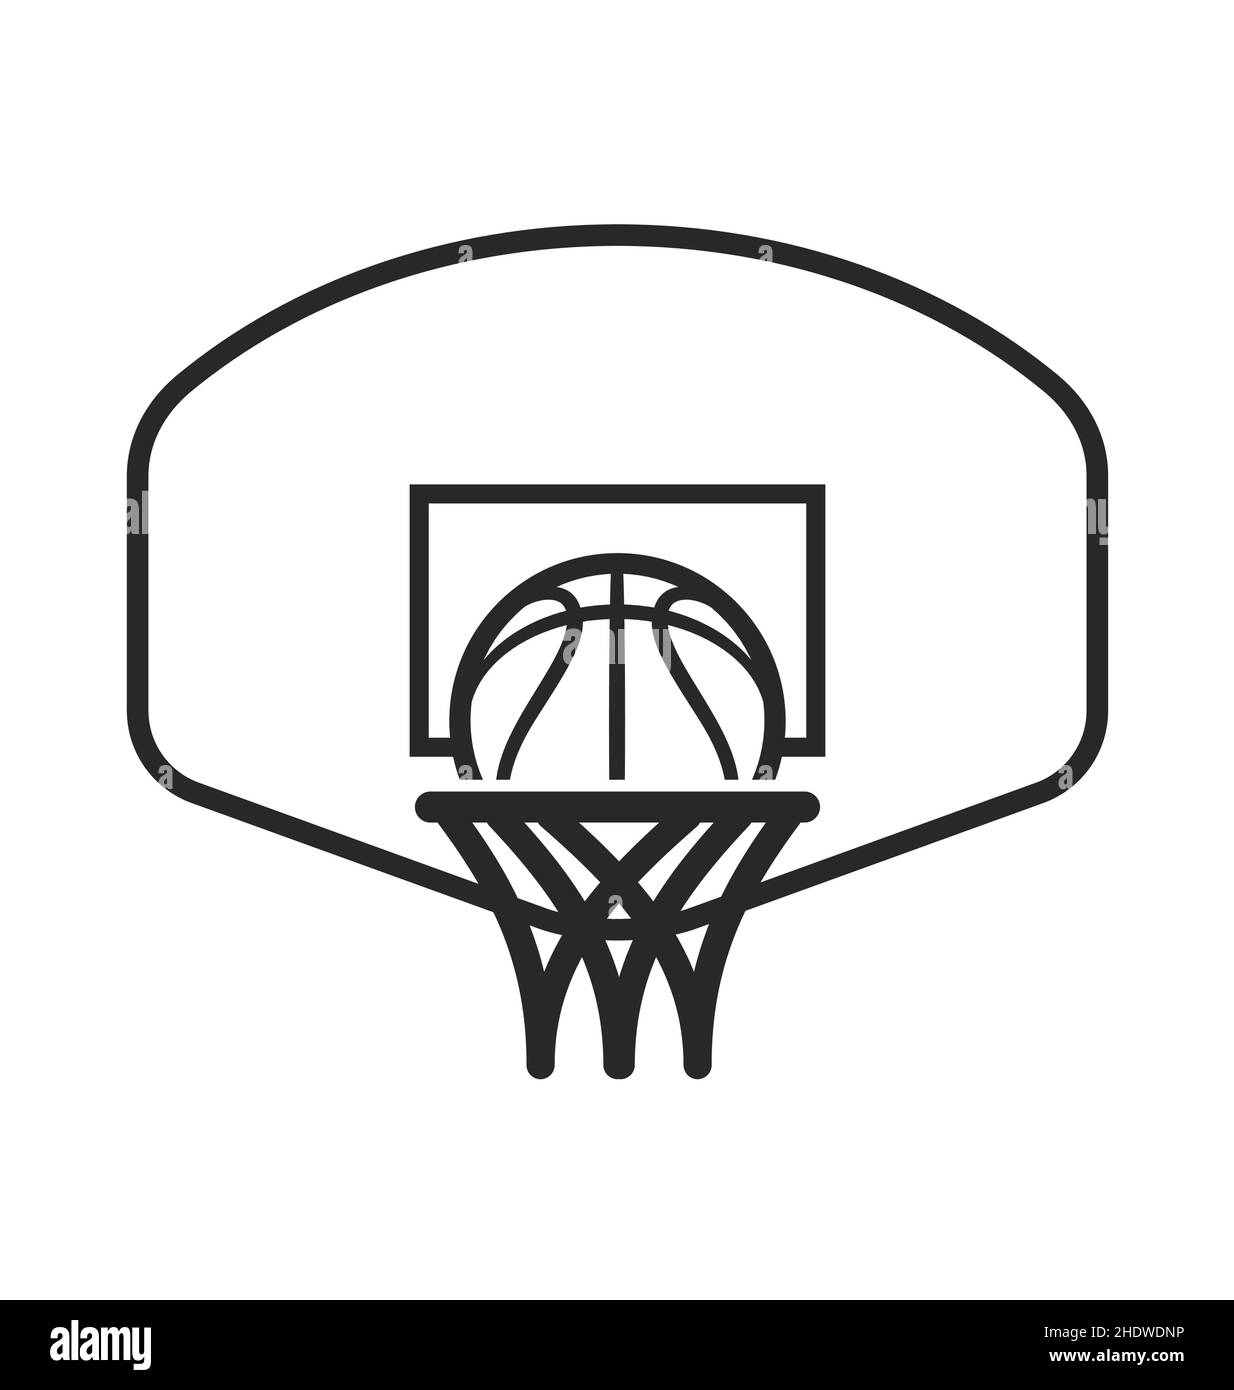 Basketball backboard Imágenes de stock en blanco y negro - Alamy